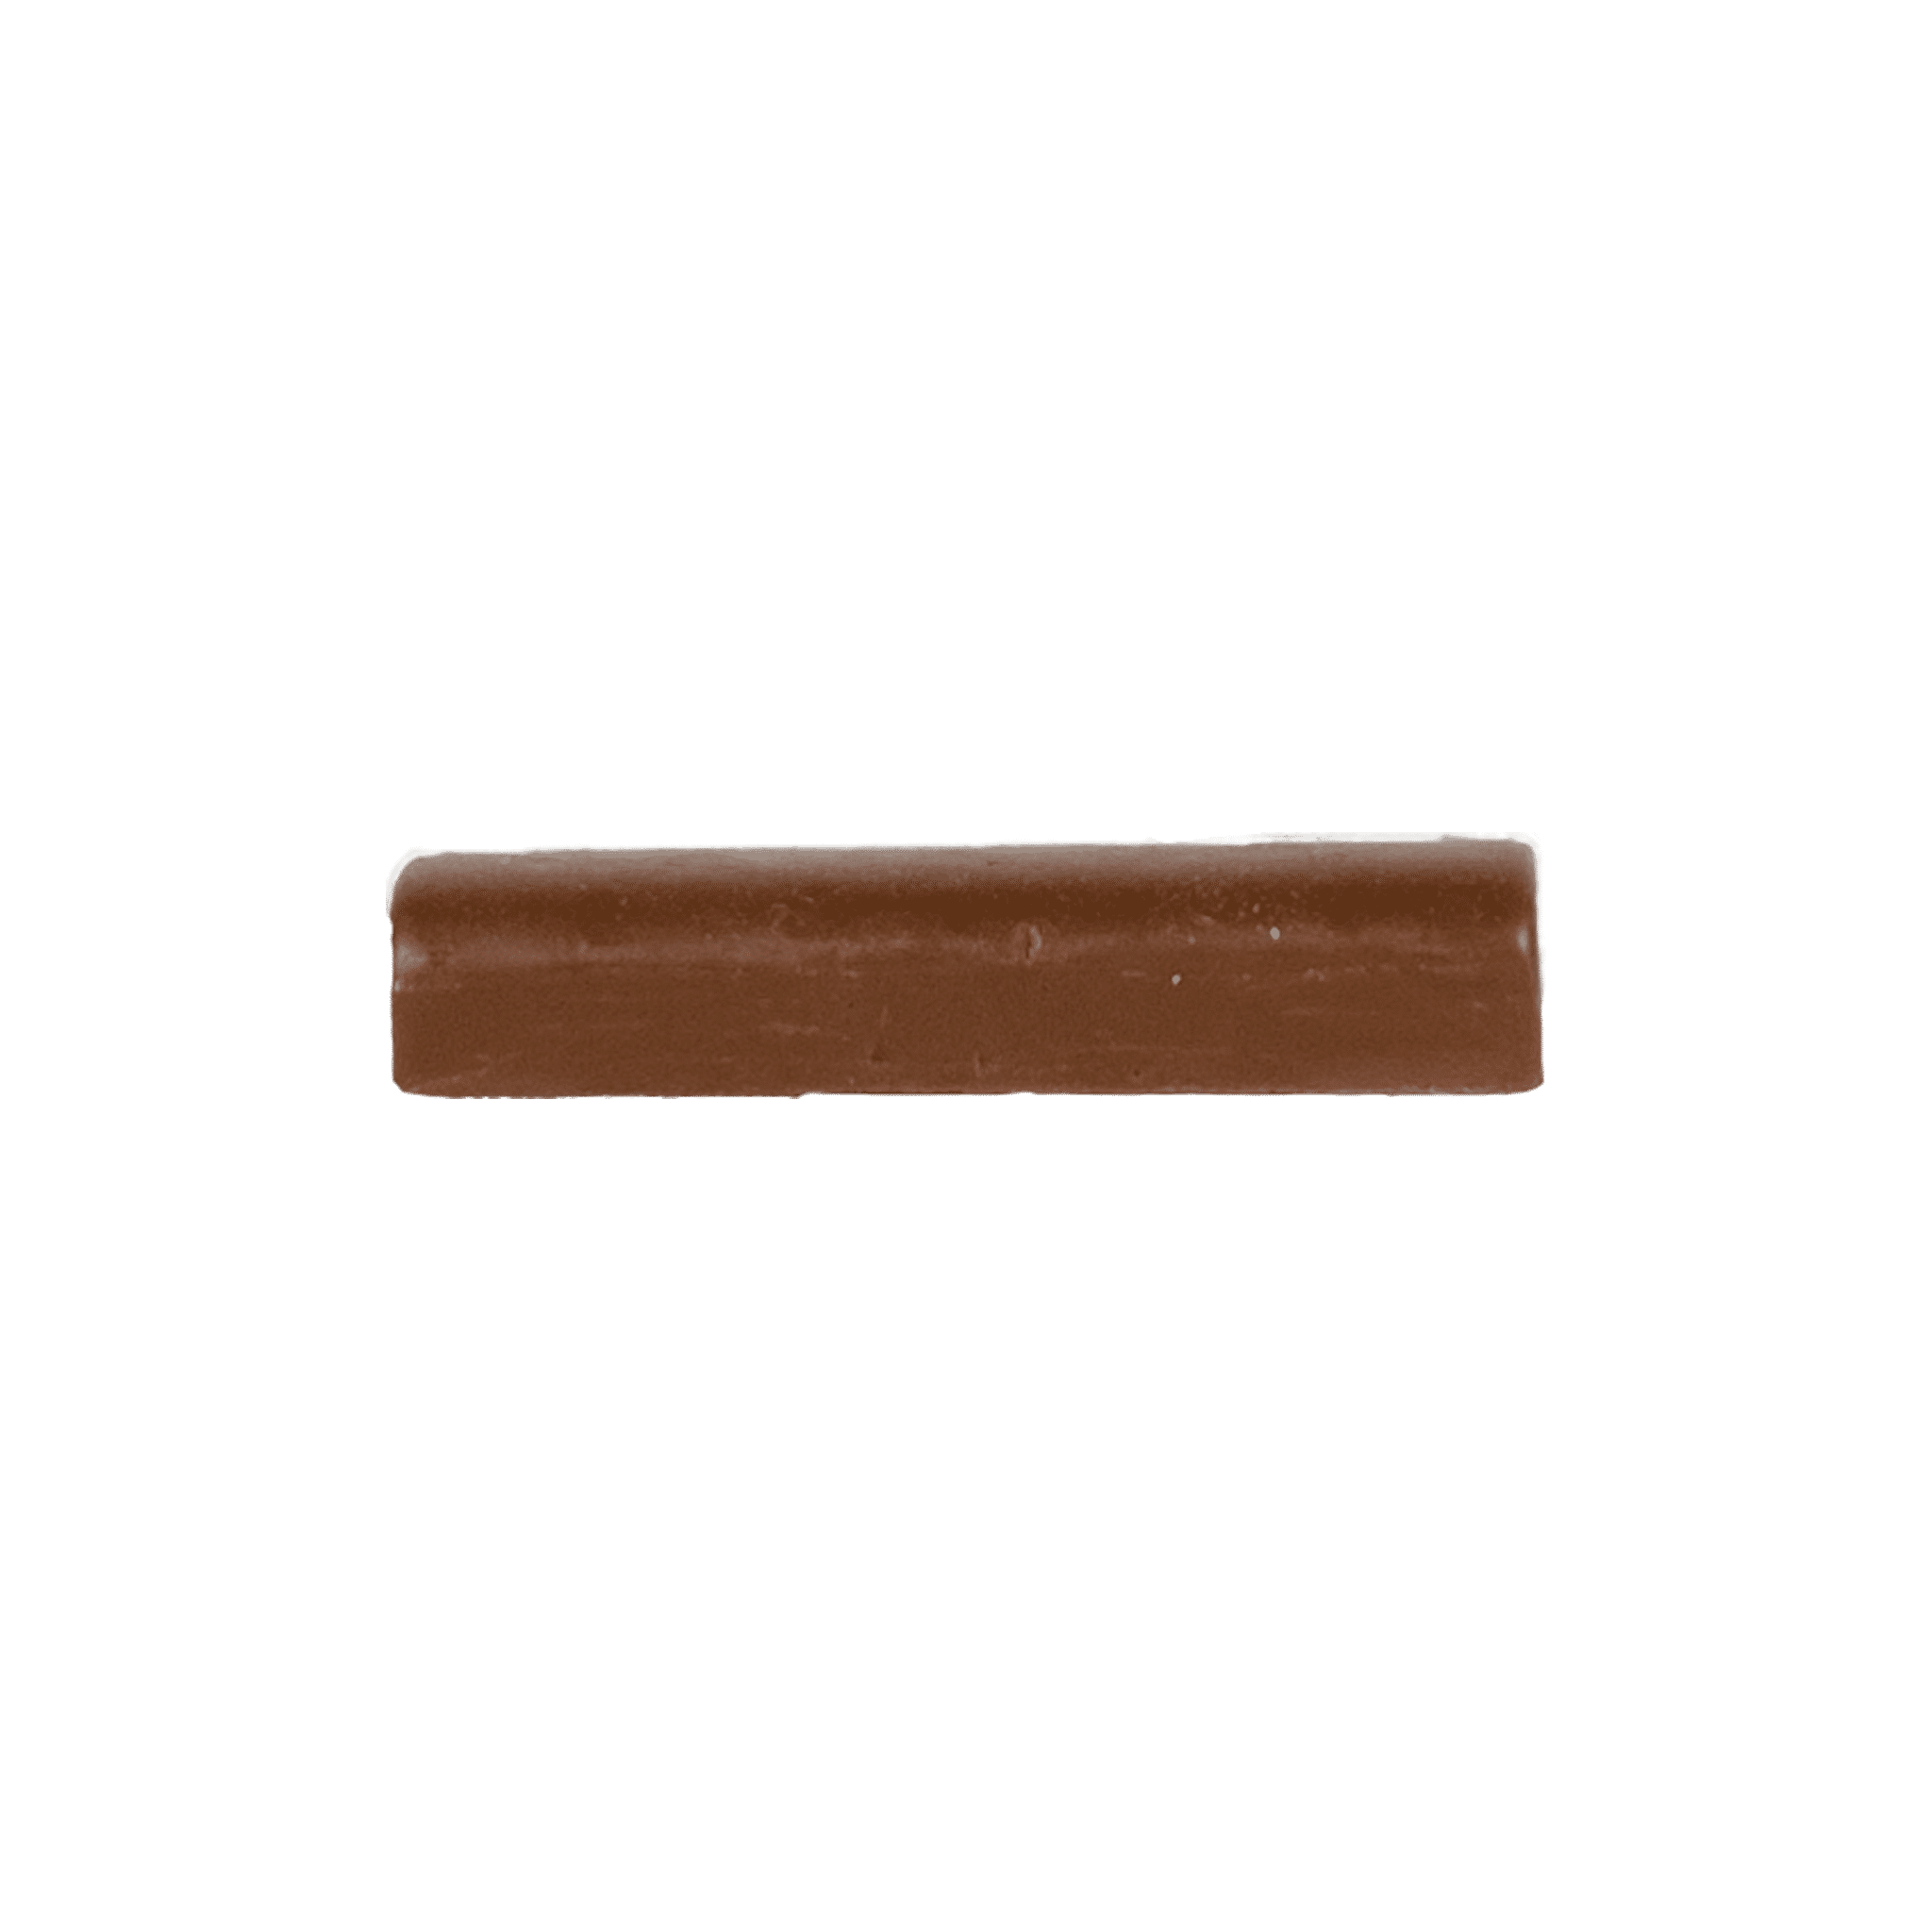 CarnaCrystalline Wax Stick – The Walnut Log LLC